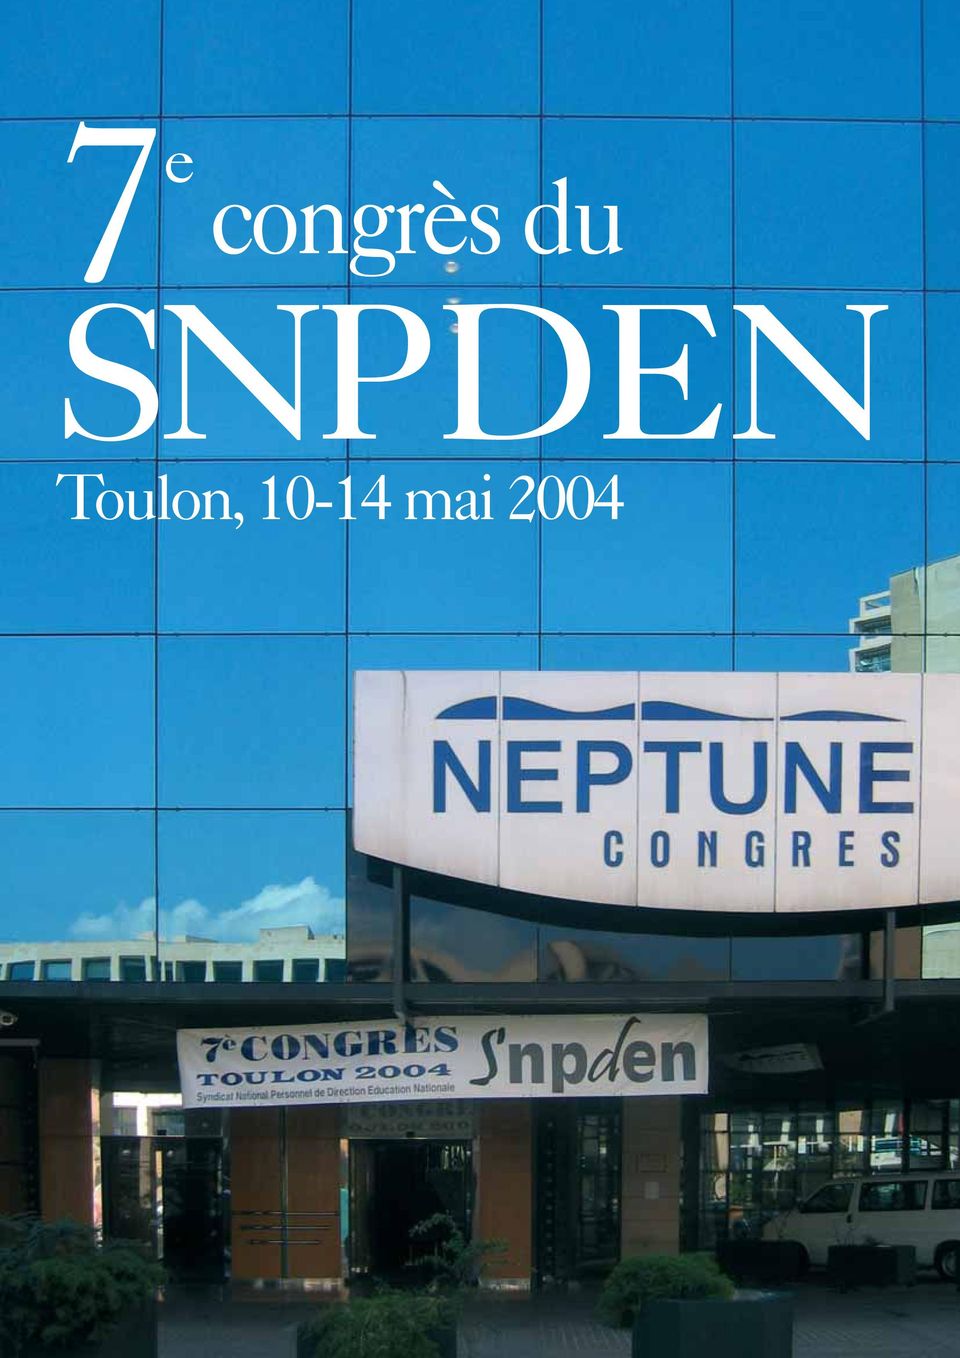 SNPDEN Toulon, 10-14 mai